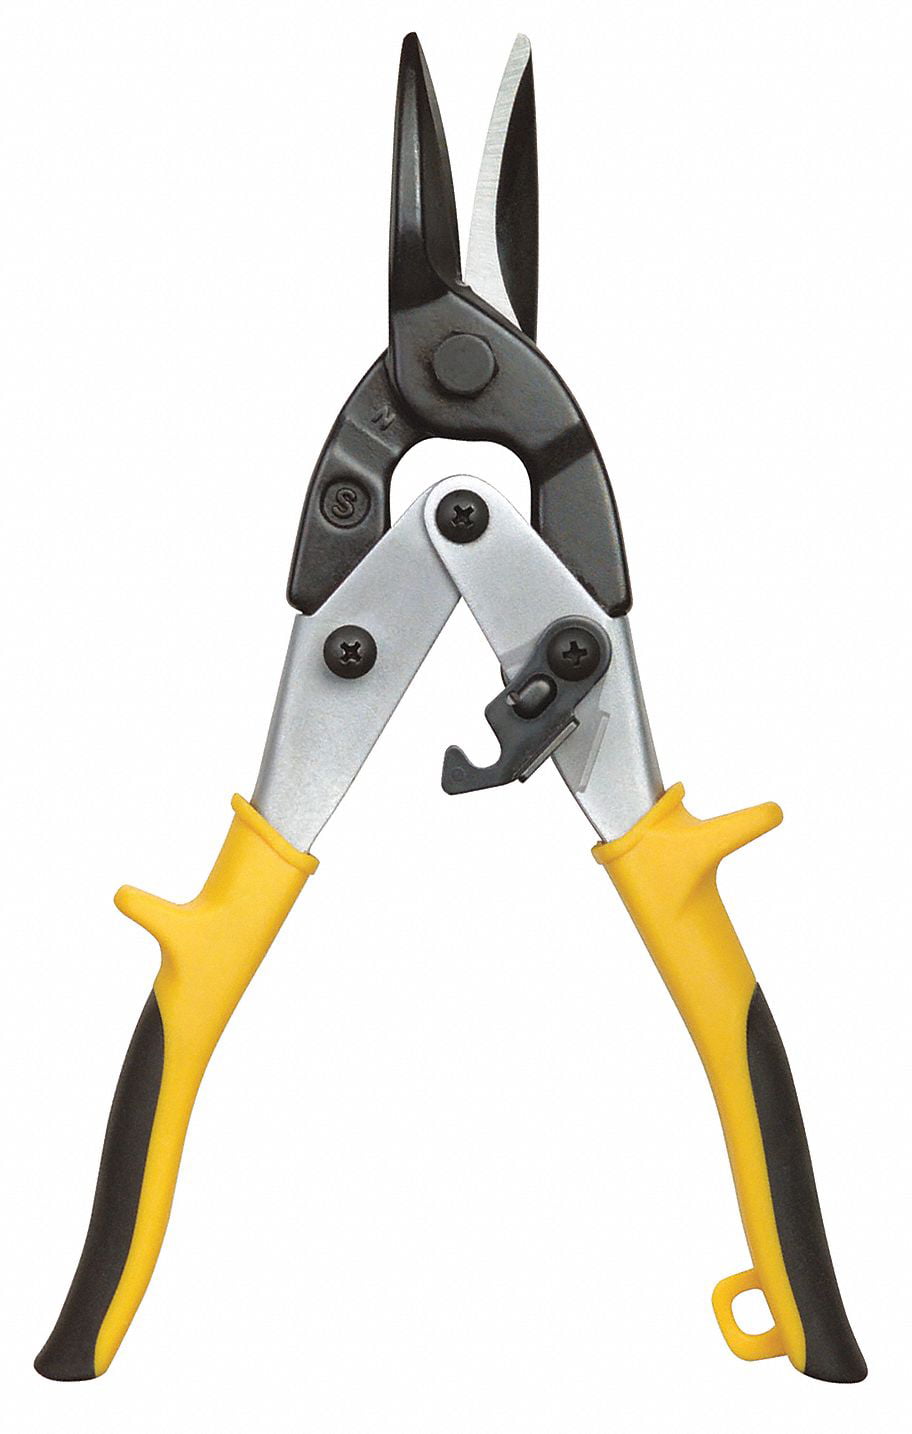 DOACT Tin Snips Metal Shears, Cutters Manual Steel Metal Scissors